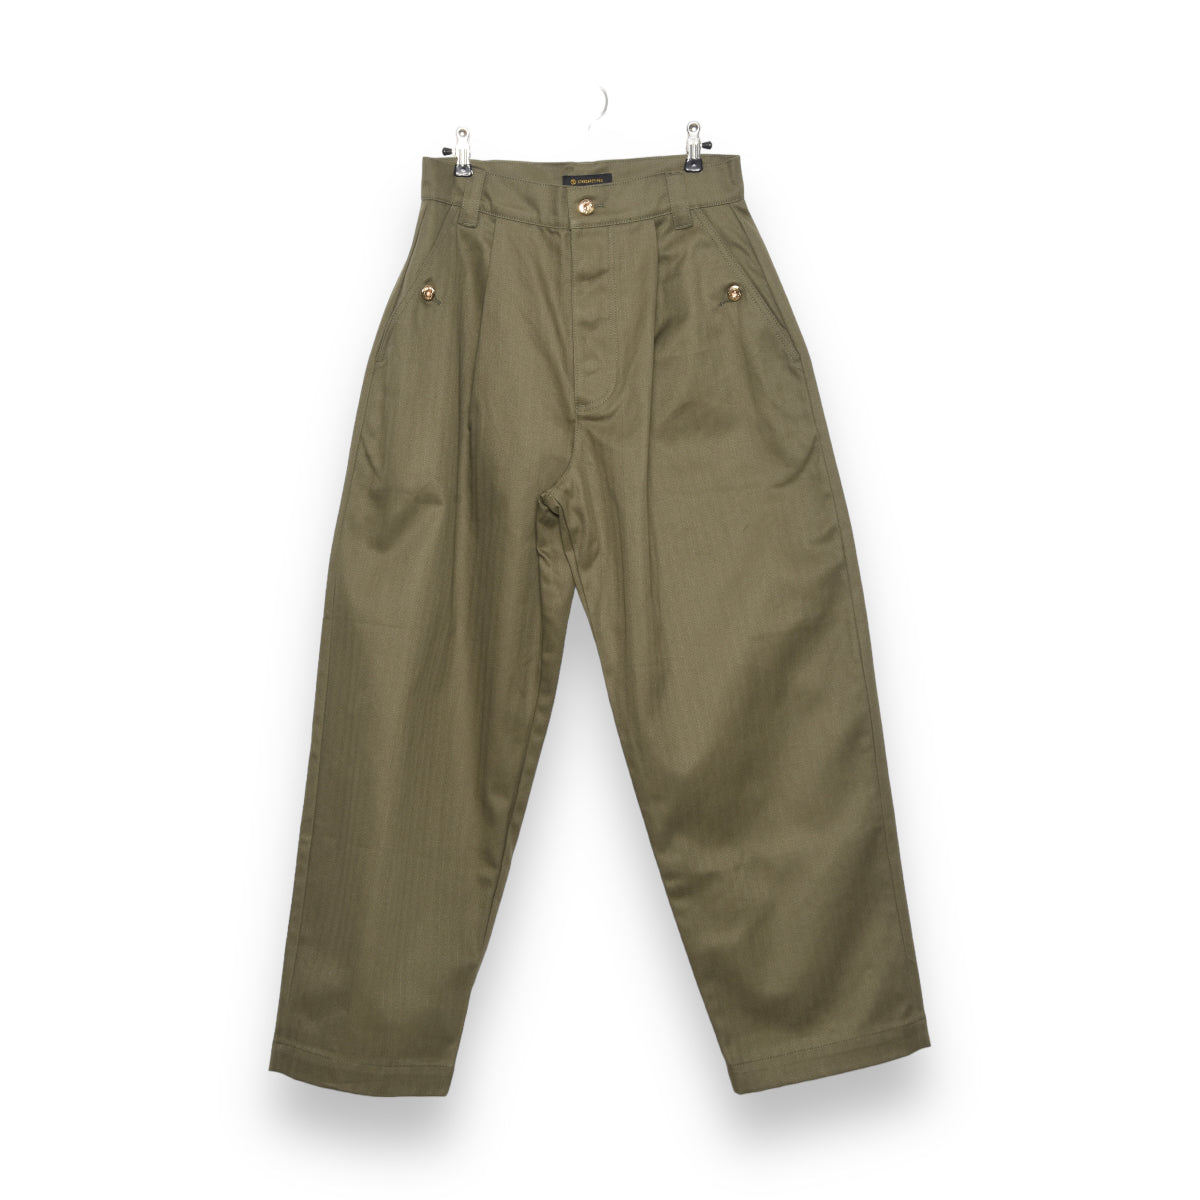 Standardtypes Naval Button Pants olive herringbone ST048